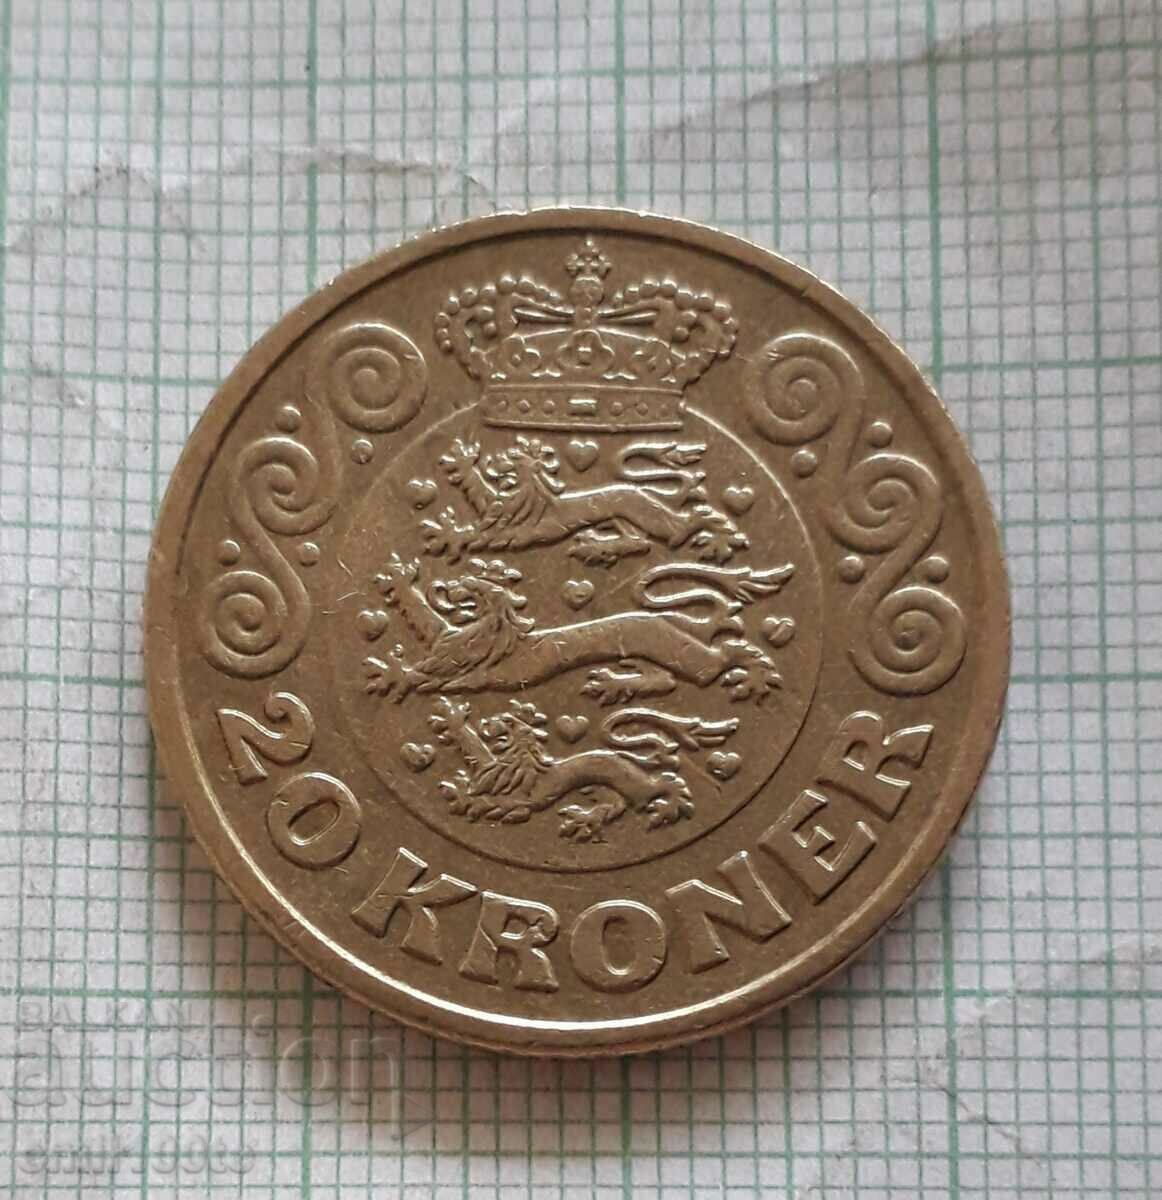 20 coroane 2014. Danemarca